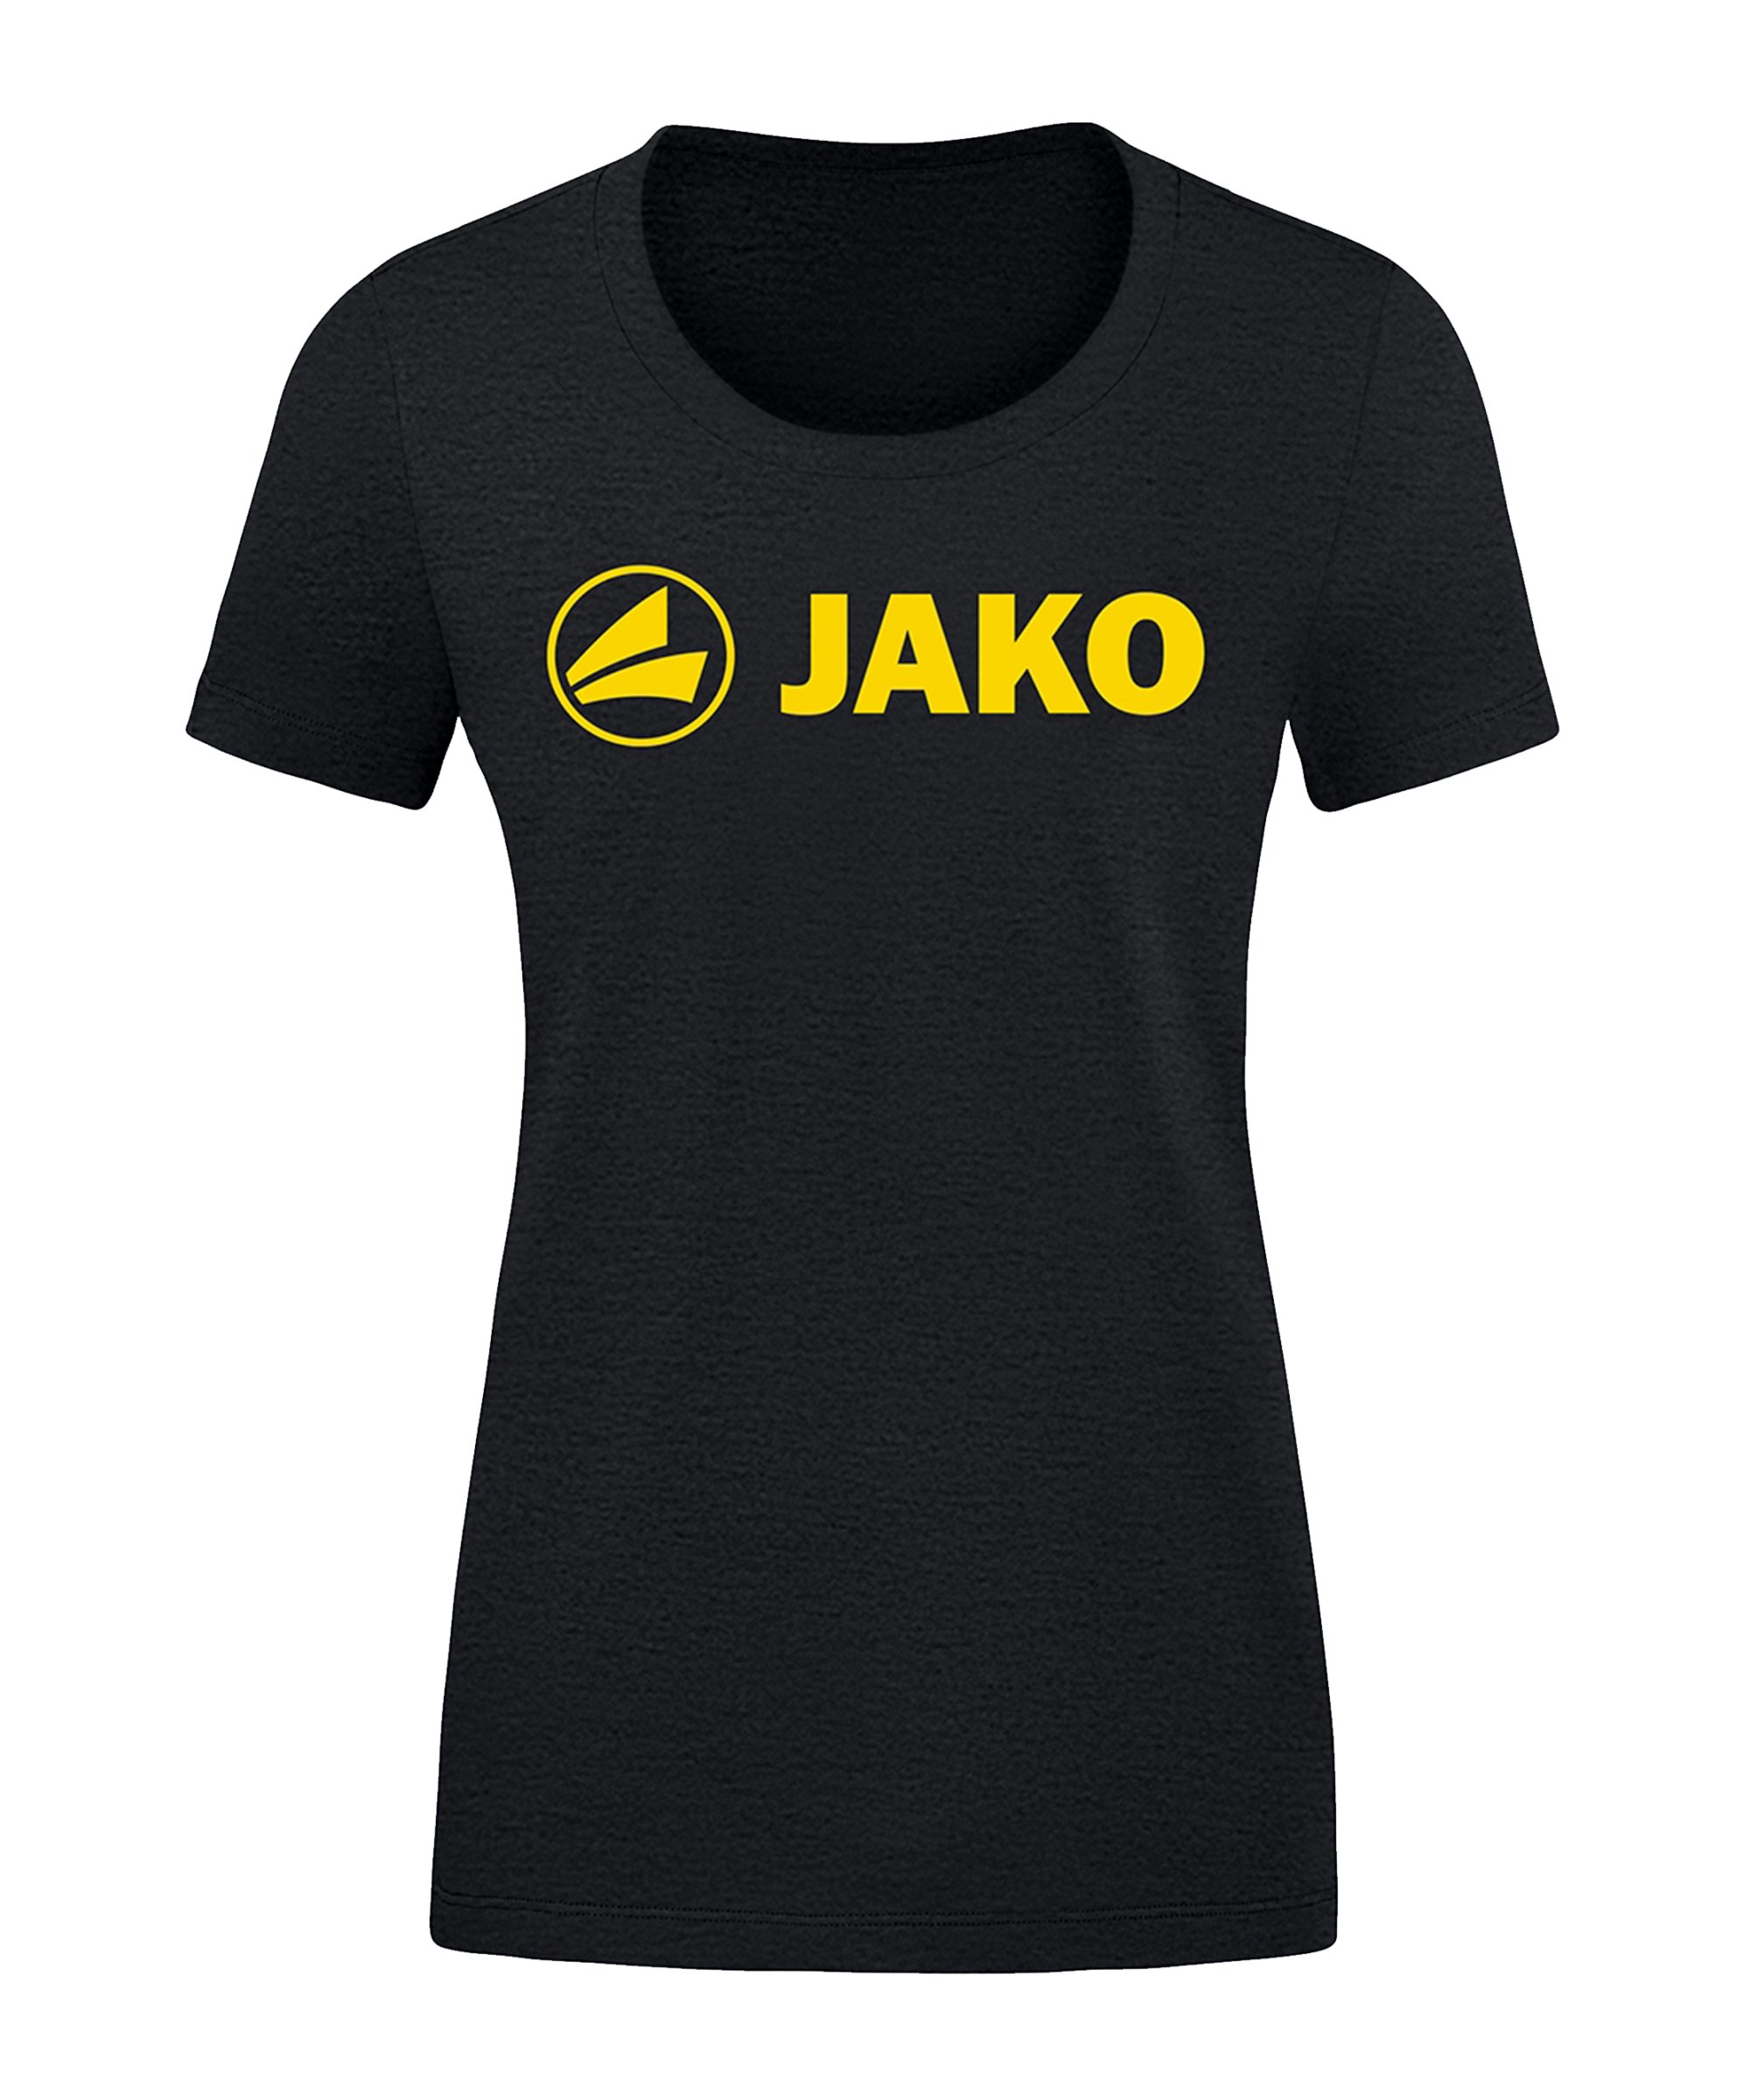 JAKO Promo T-Shirt Damen Schwarz Gelb F505 - schwarz